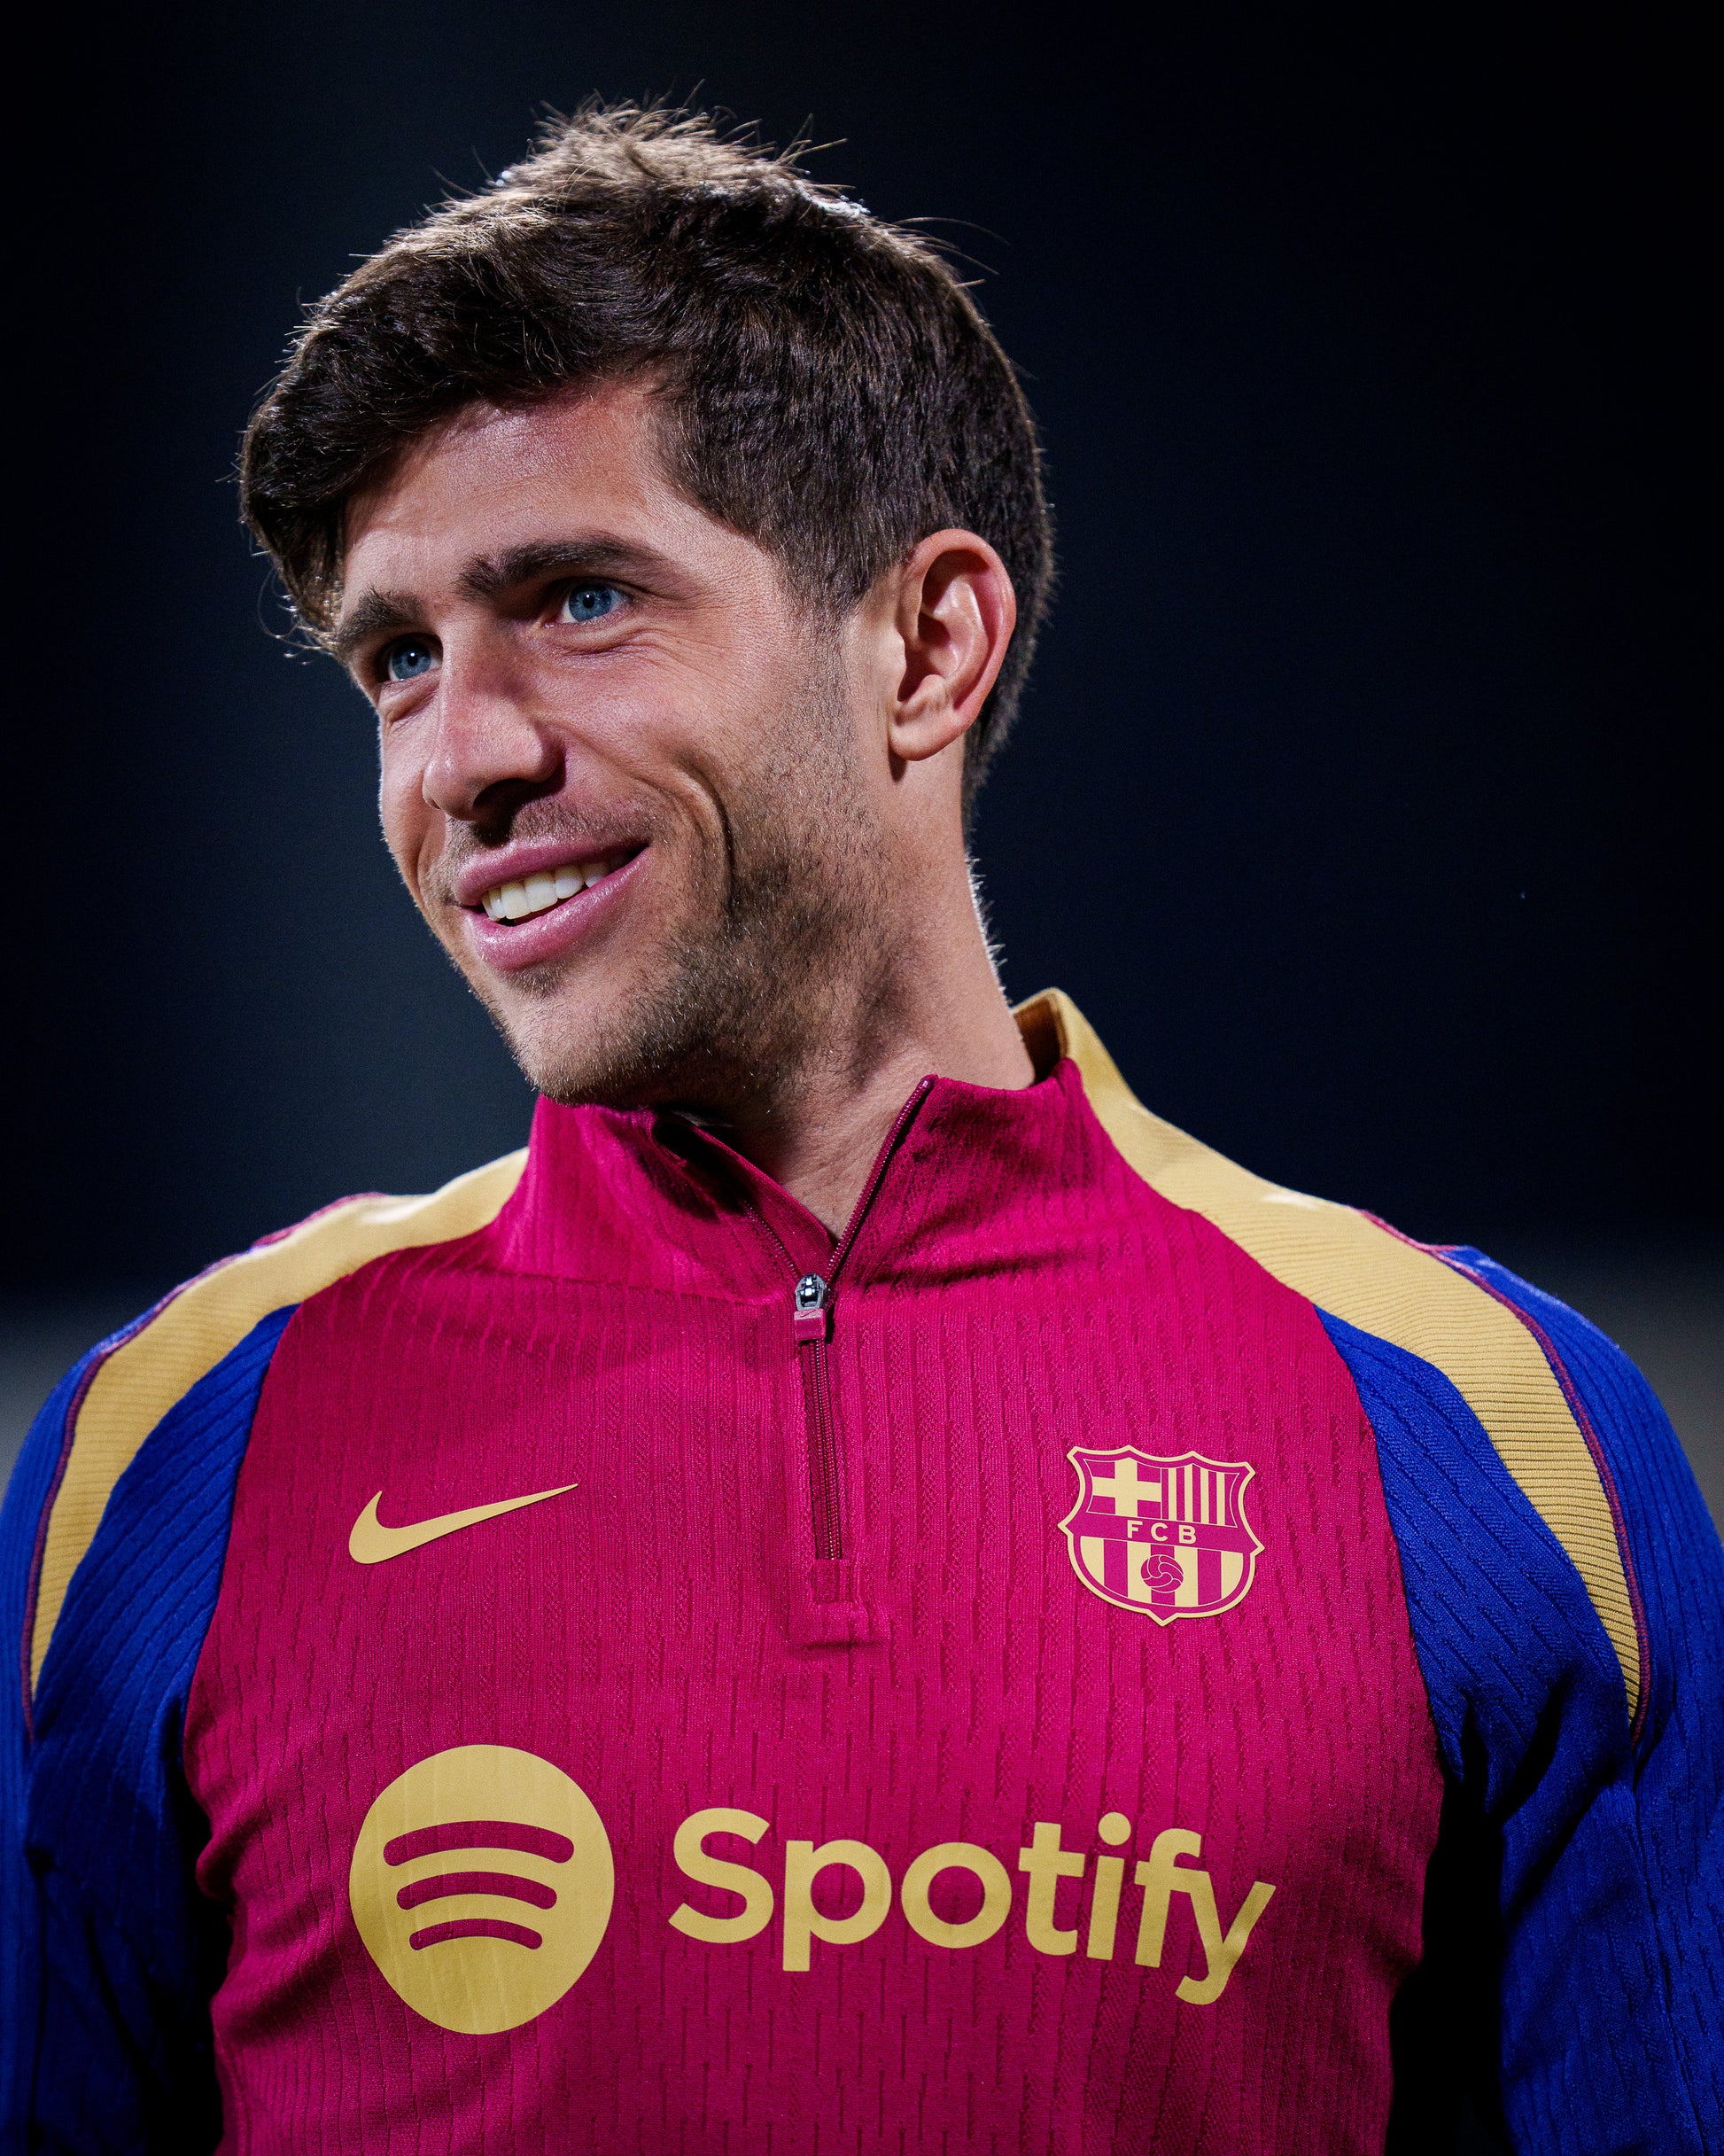 Rotes Trainings-Sweatshirt des FC Barcelona 23/24 – Player's Edition